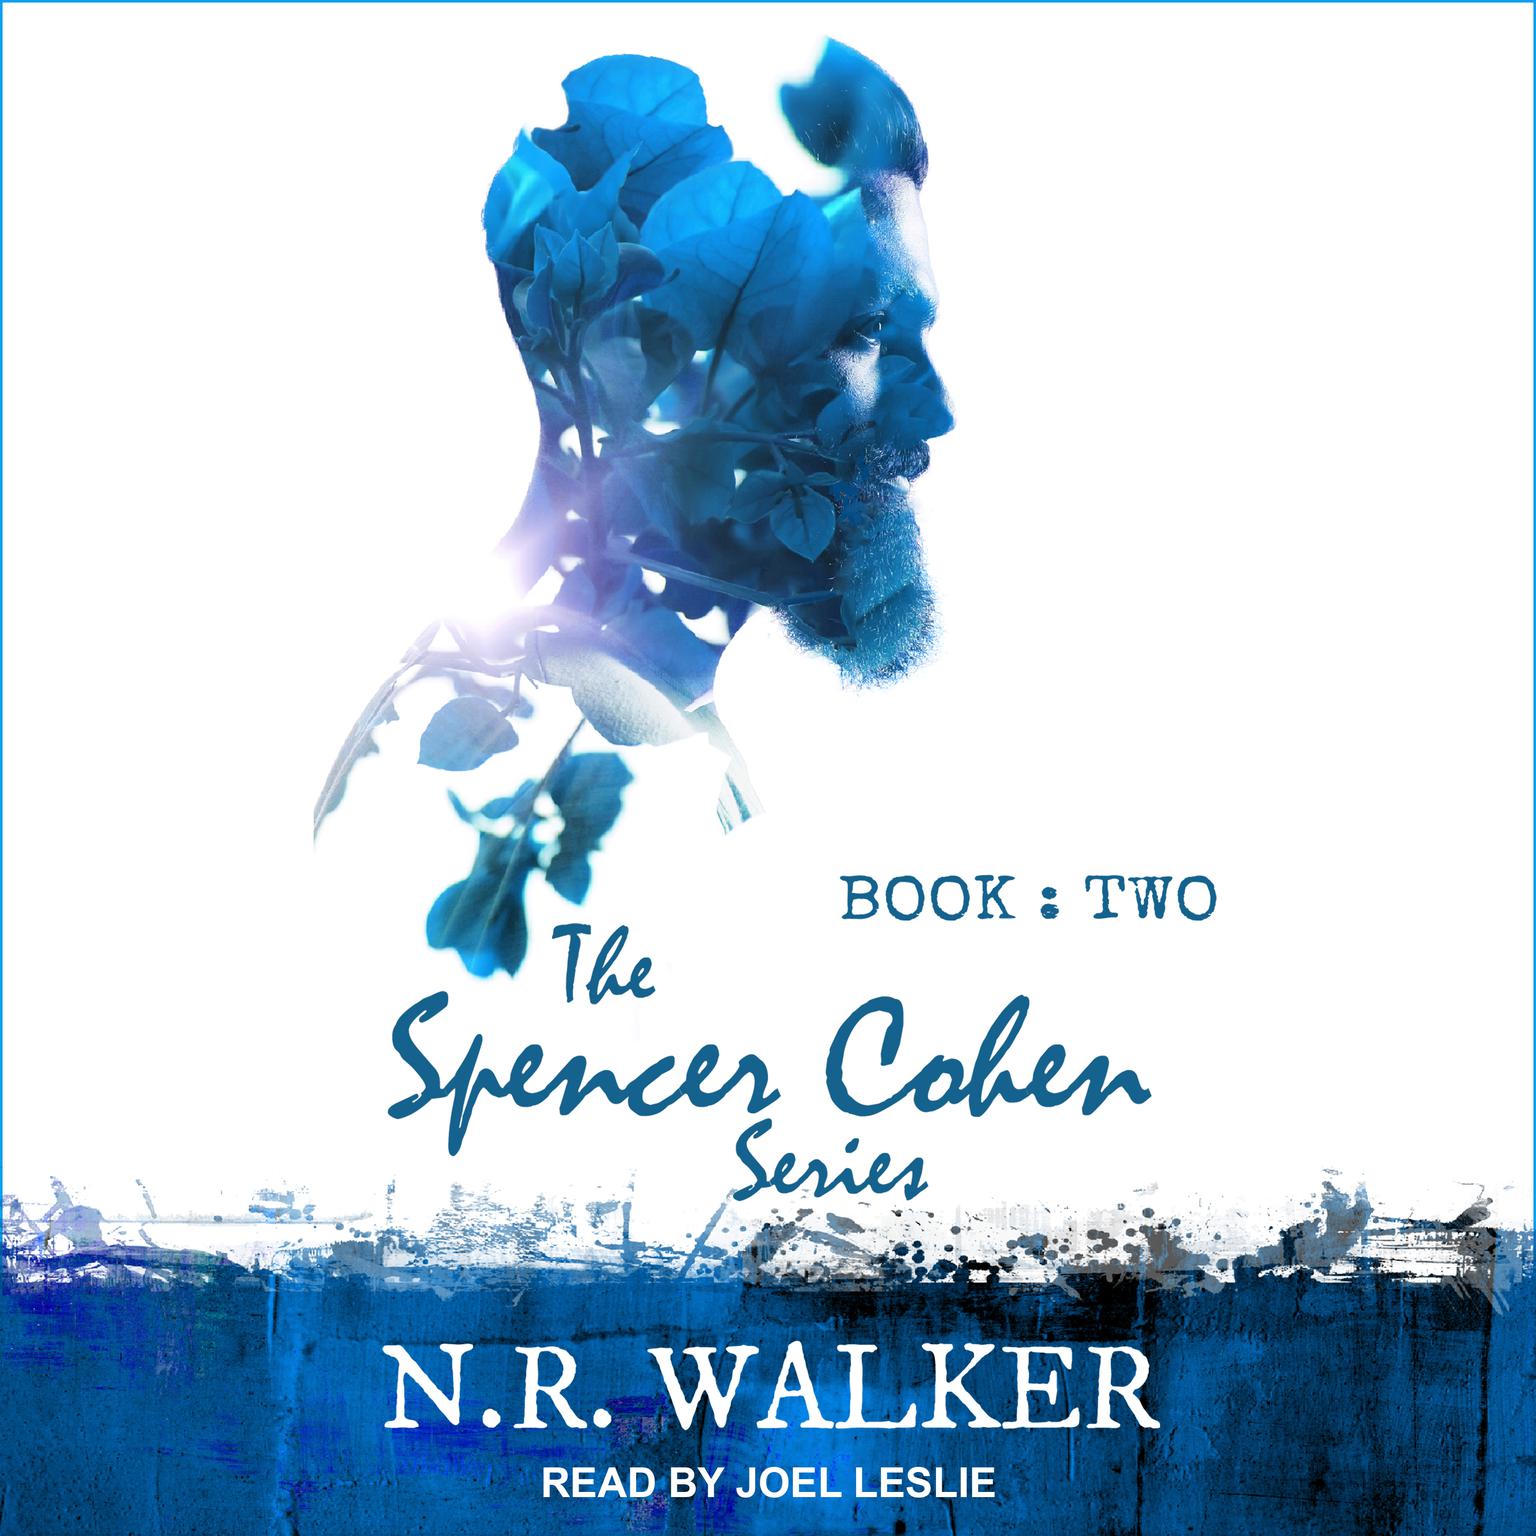 Spencer Cohen Series, Book Two  Audiobook, by N.R. Walker